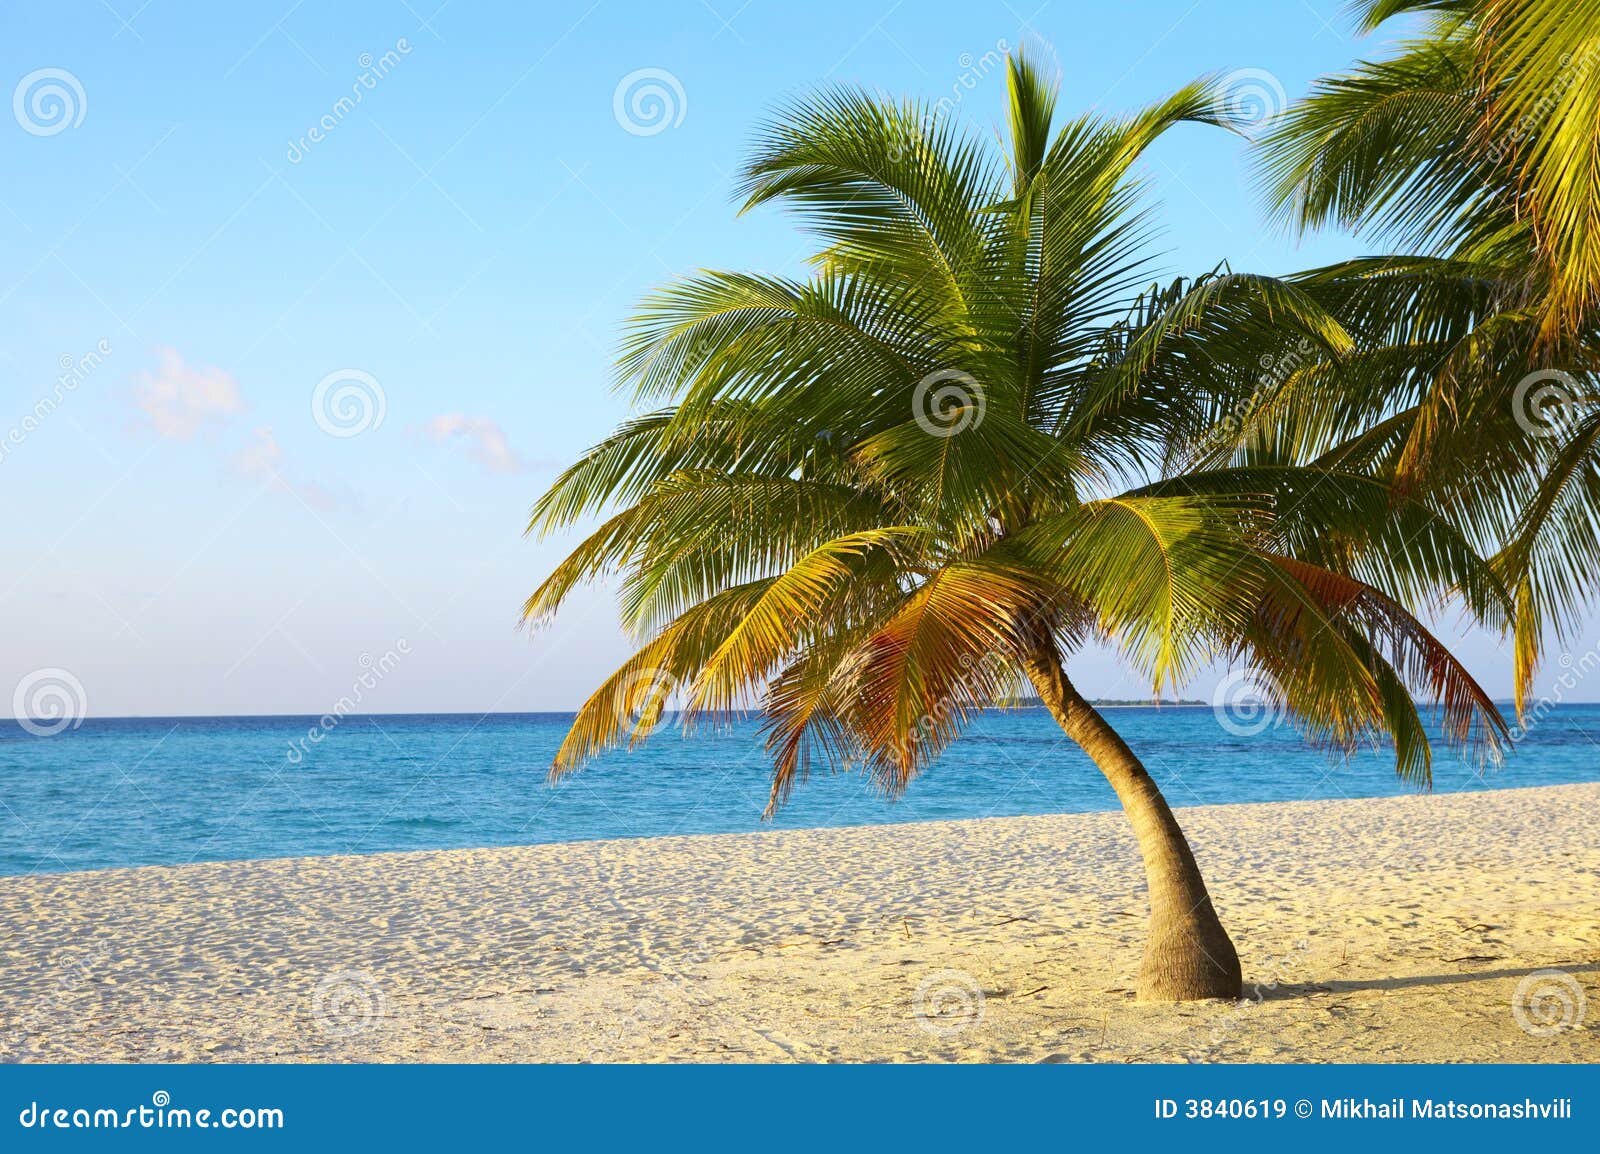 palmtree on a tropical beach